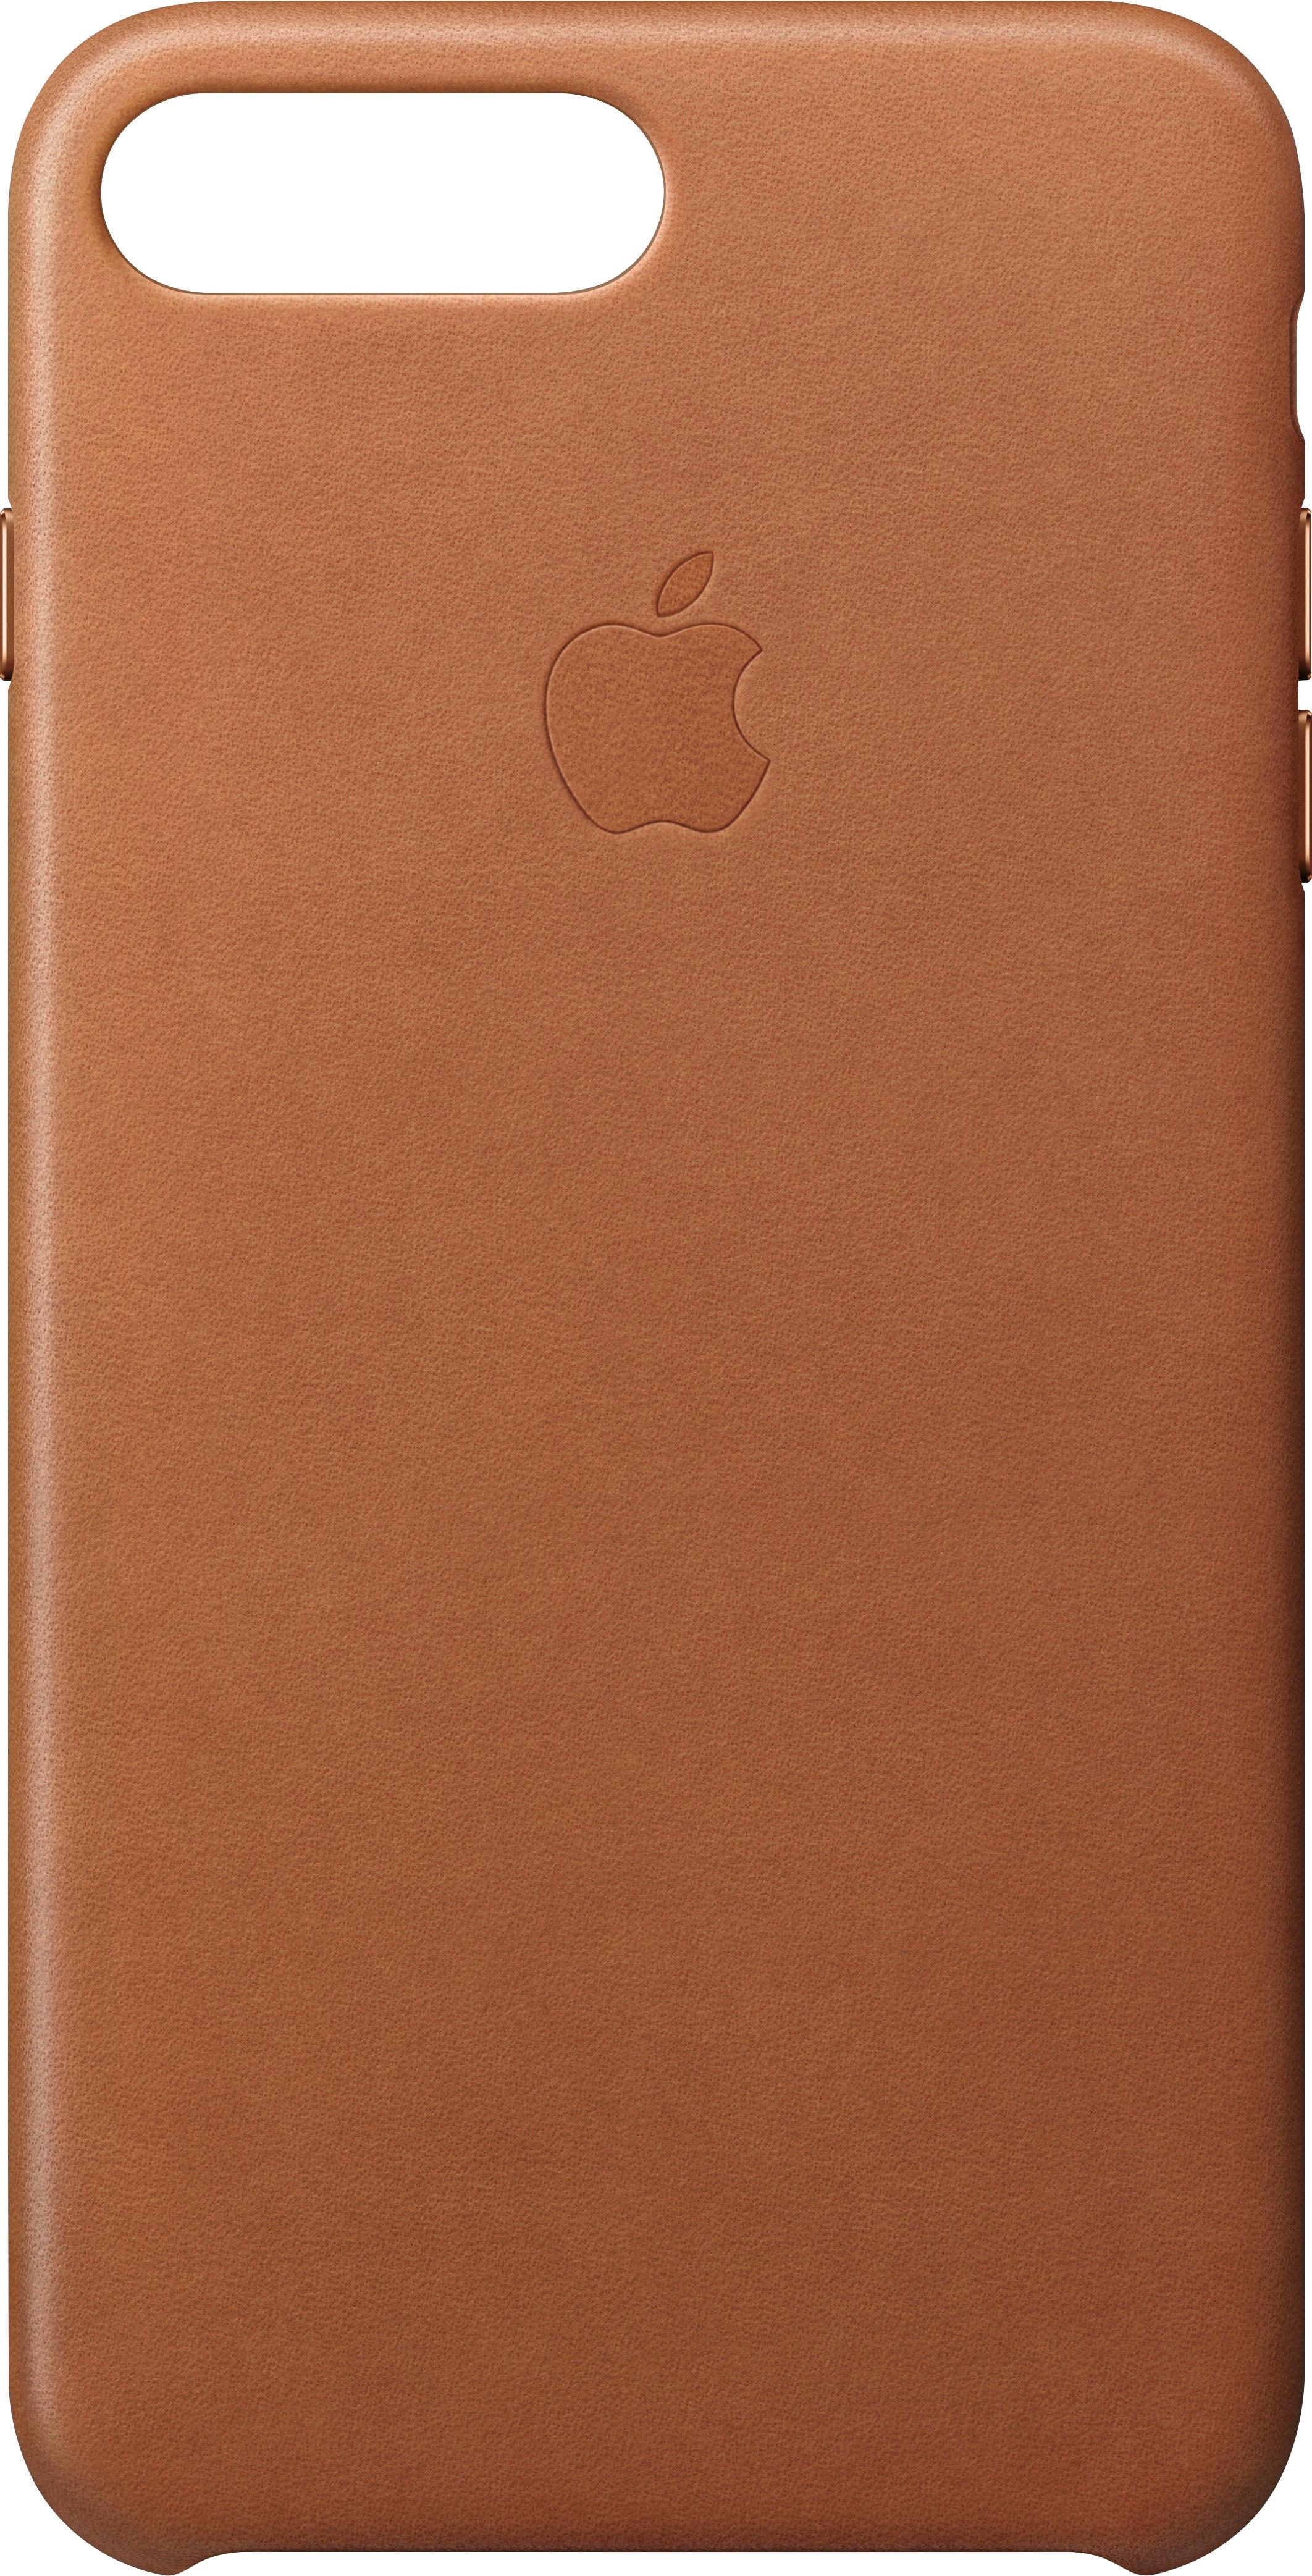 Apple iPhone® 8 Plus/7 Plus Leather Case Saddle Brown - Best Buy